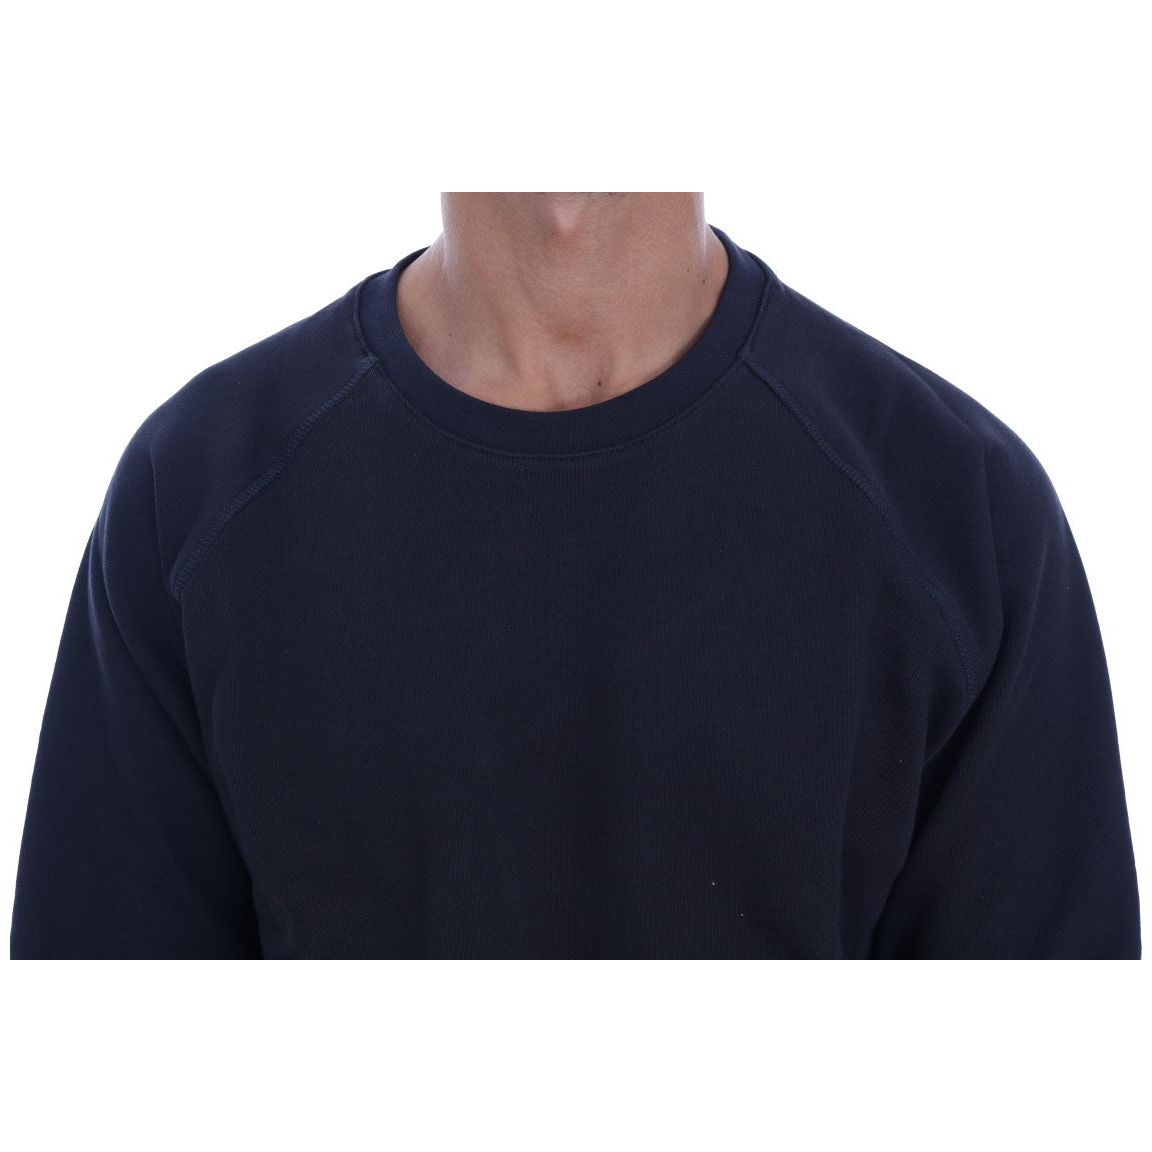 Daniele Alessandrini Chic Dark Blue Crewneck Cotton Sweater blue-crewneck-cotton-sweater 457394-blue-crewneck-cotton-sweater-3.jpg